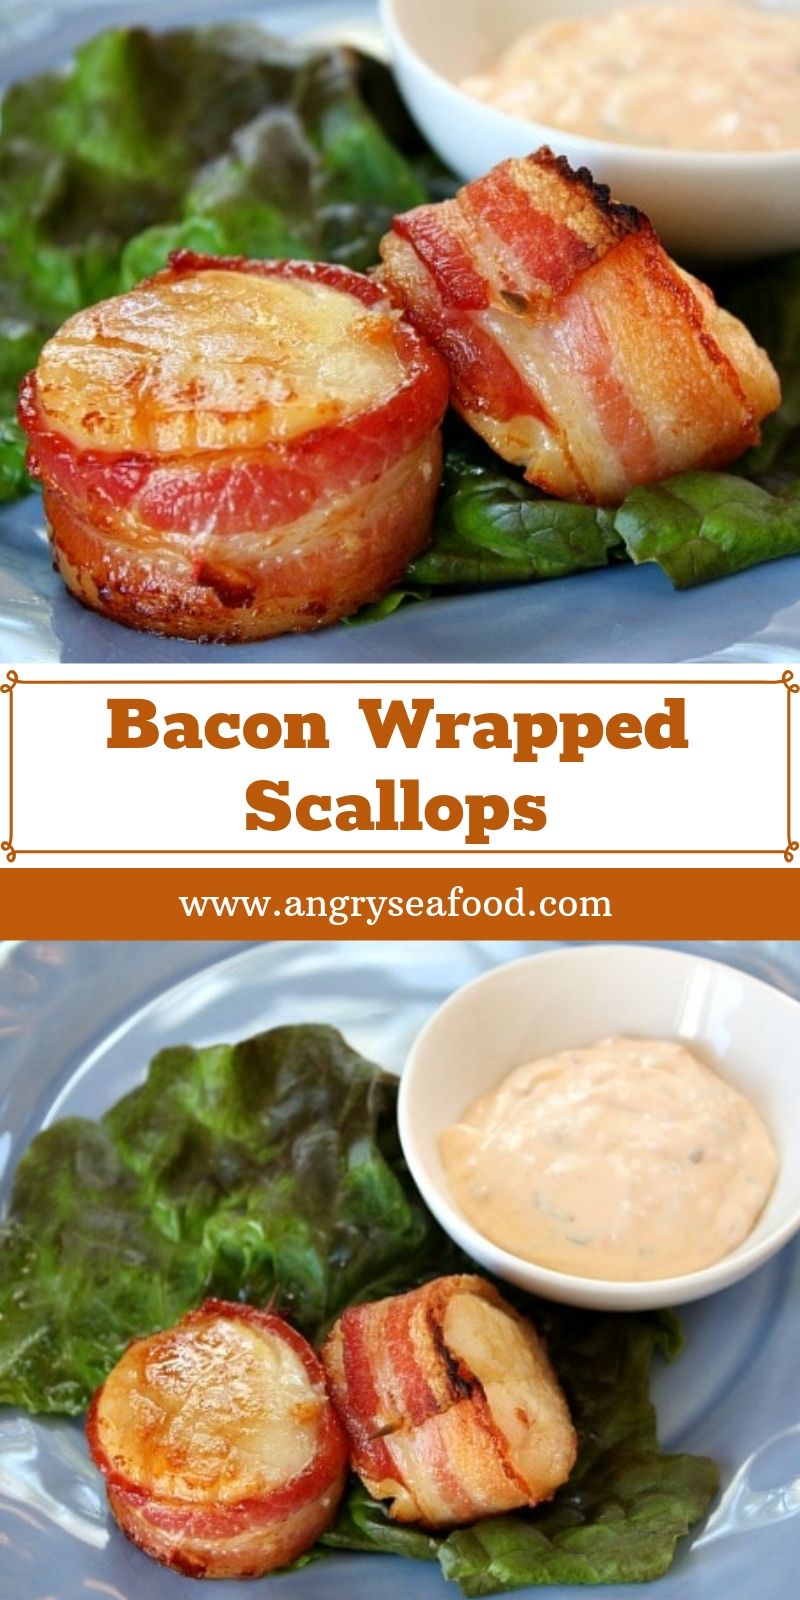  Bacon Wrapped Scallops